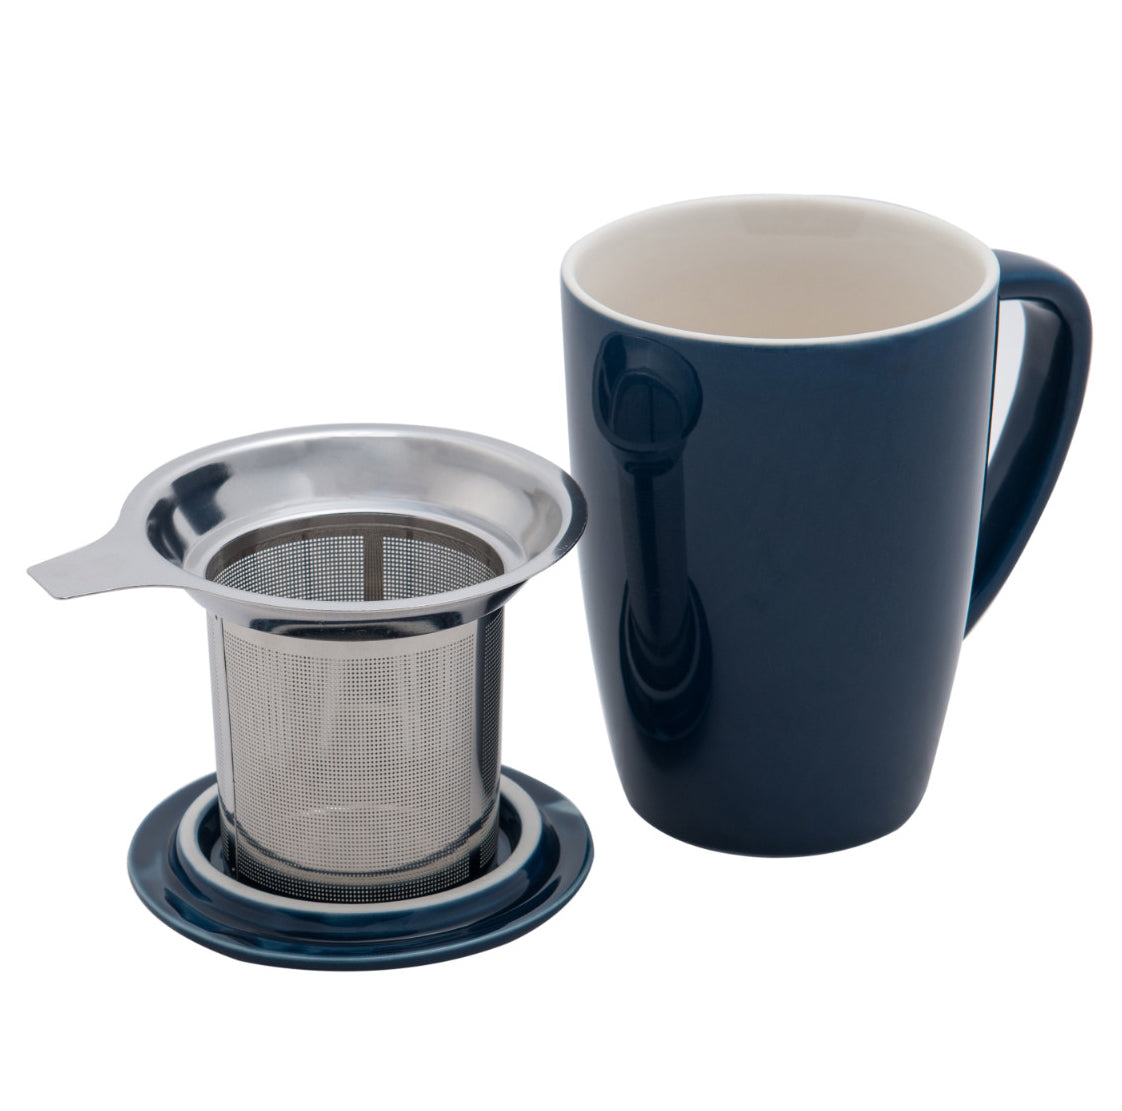 Ceramic Infuser Mug - Blue